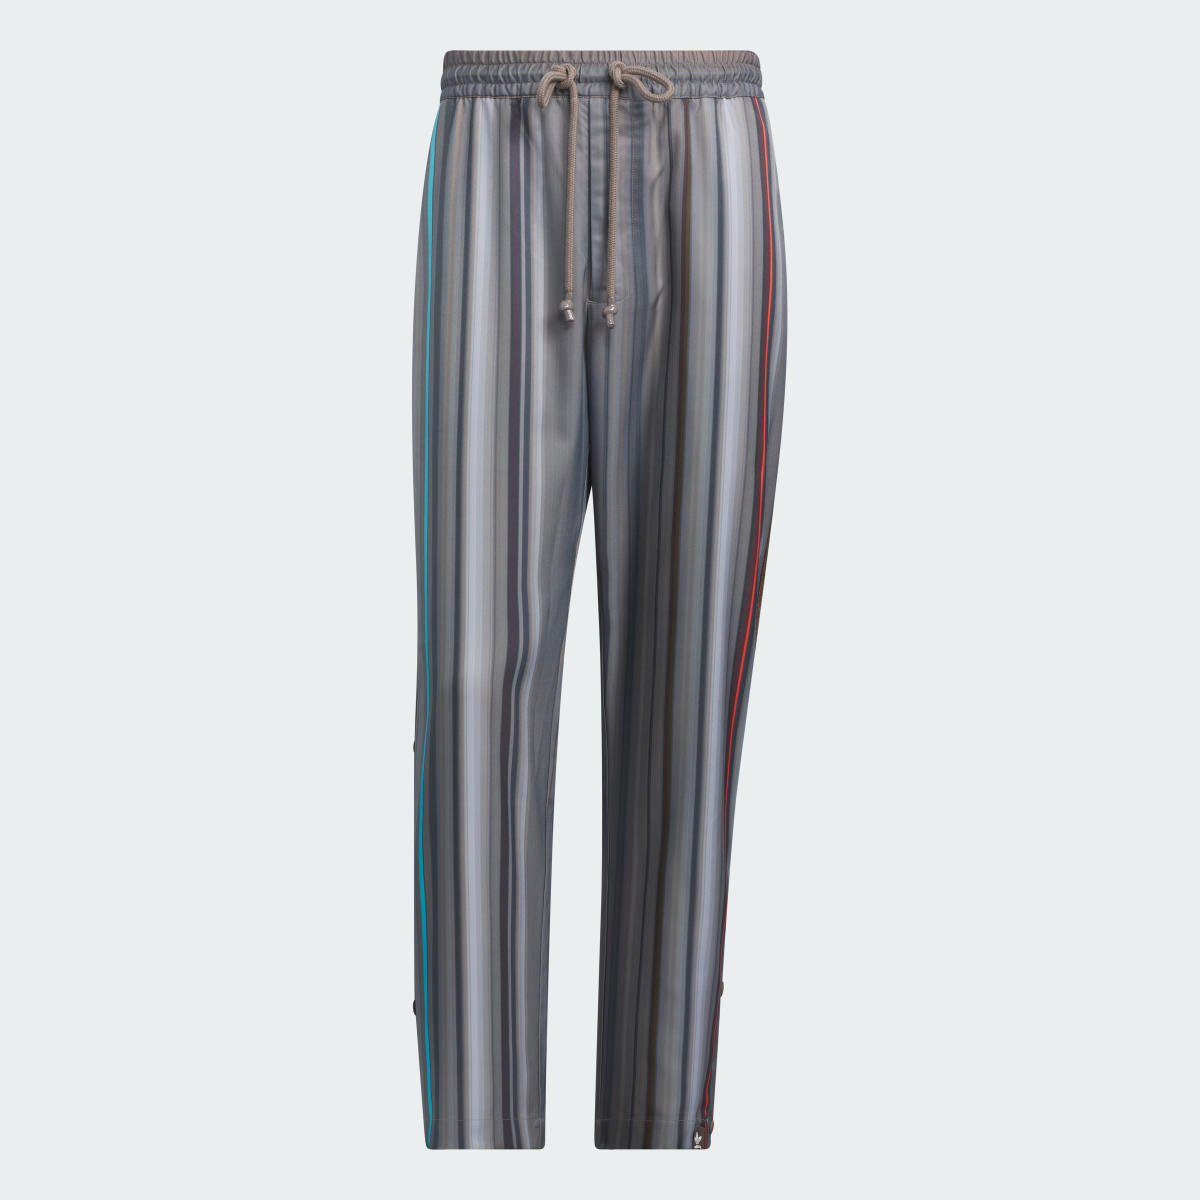 Adidas SFTM Allover Print Pants (Gender Neutral). 4